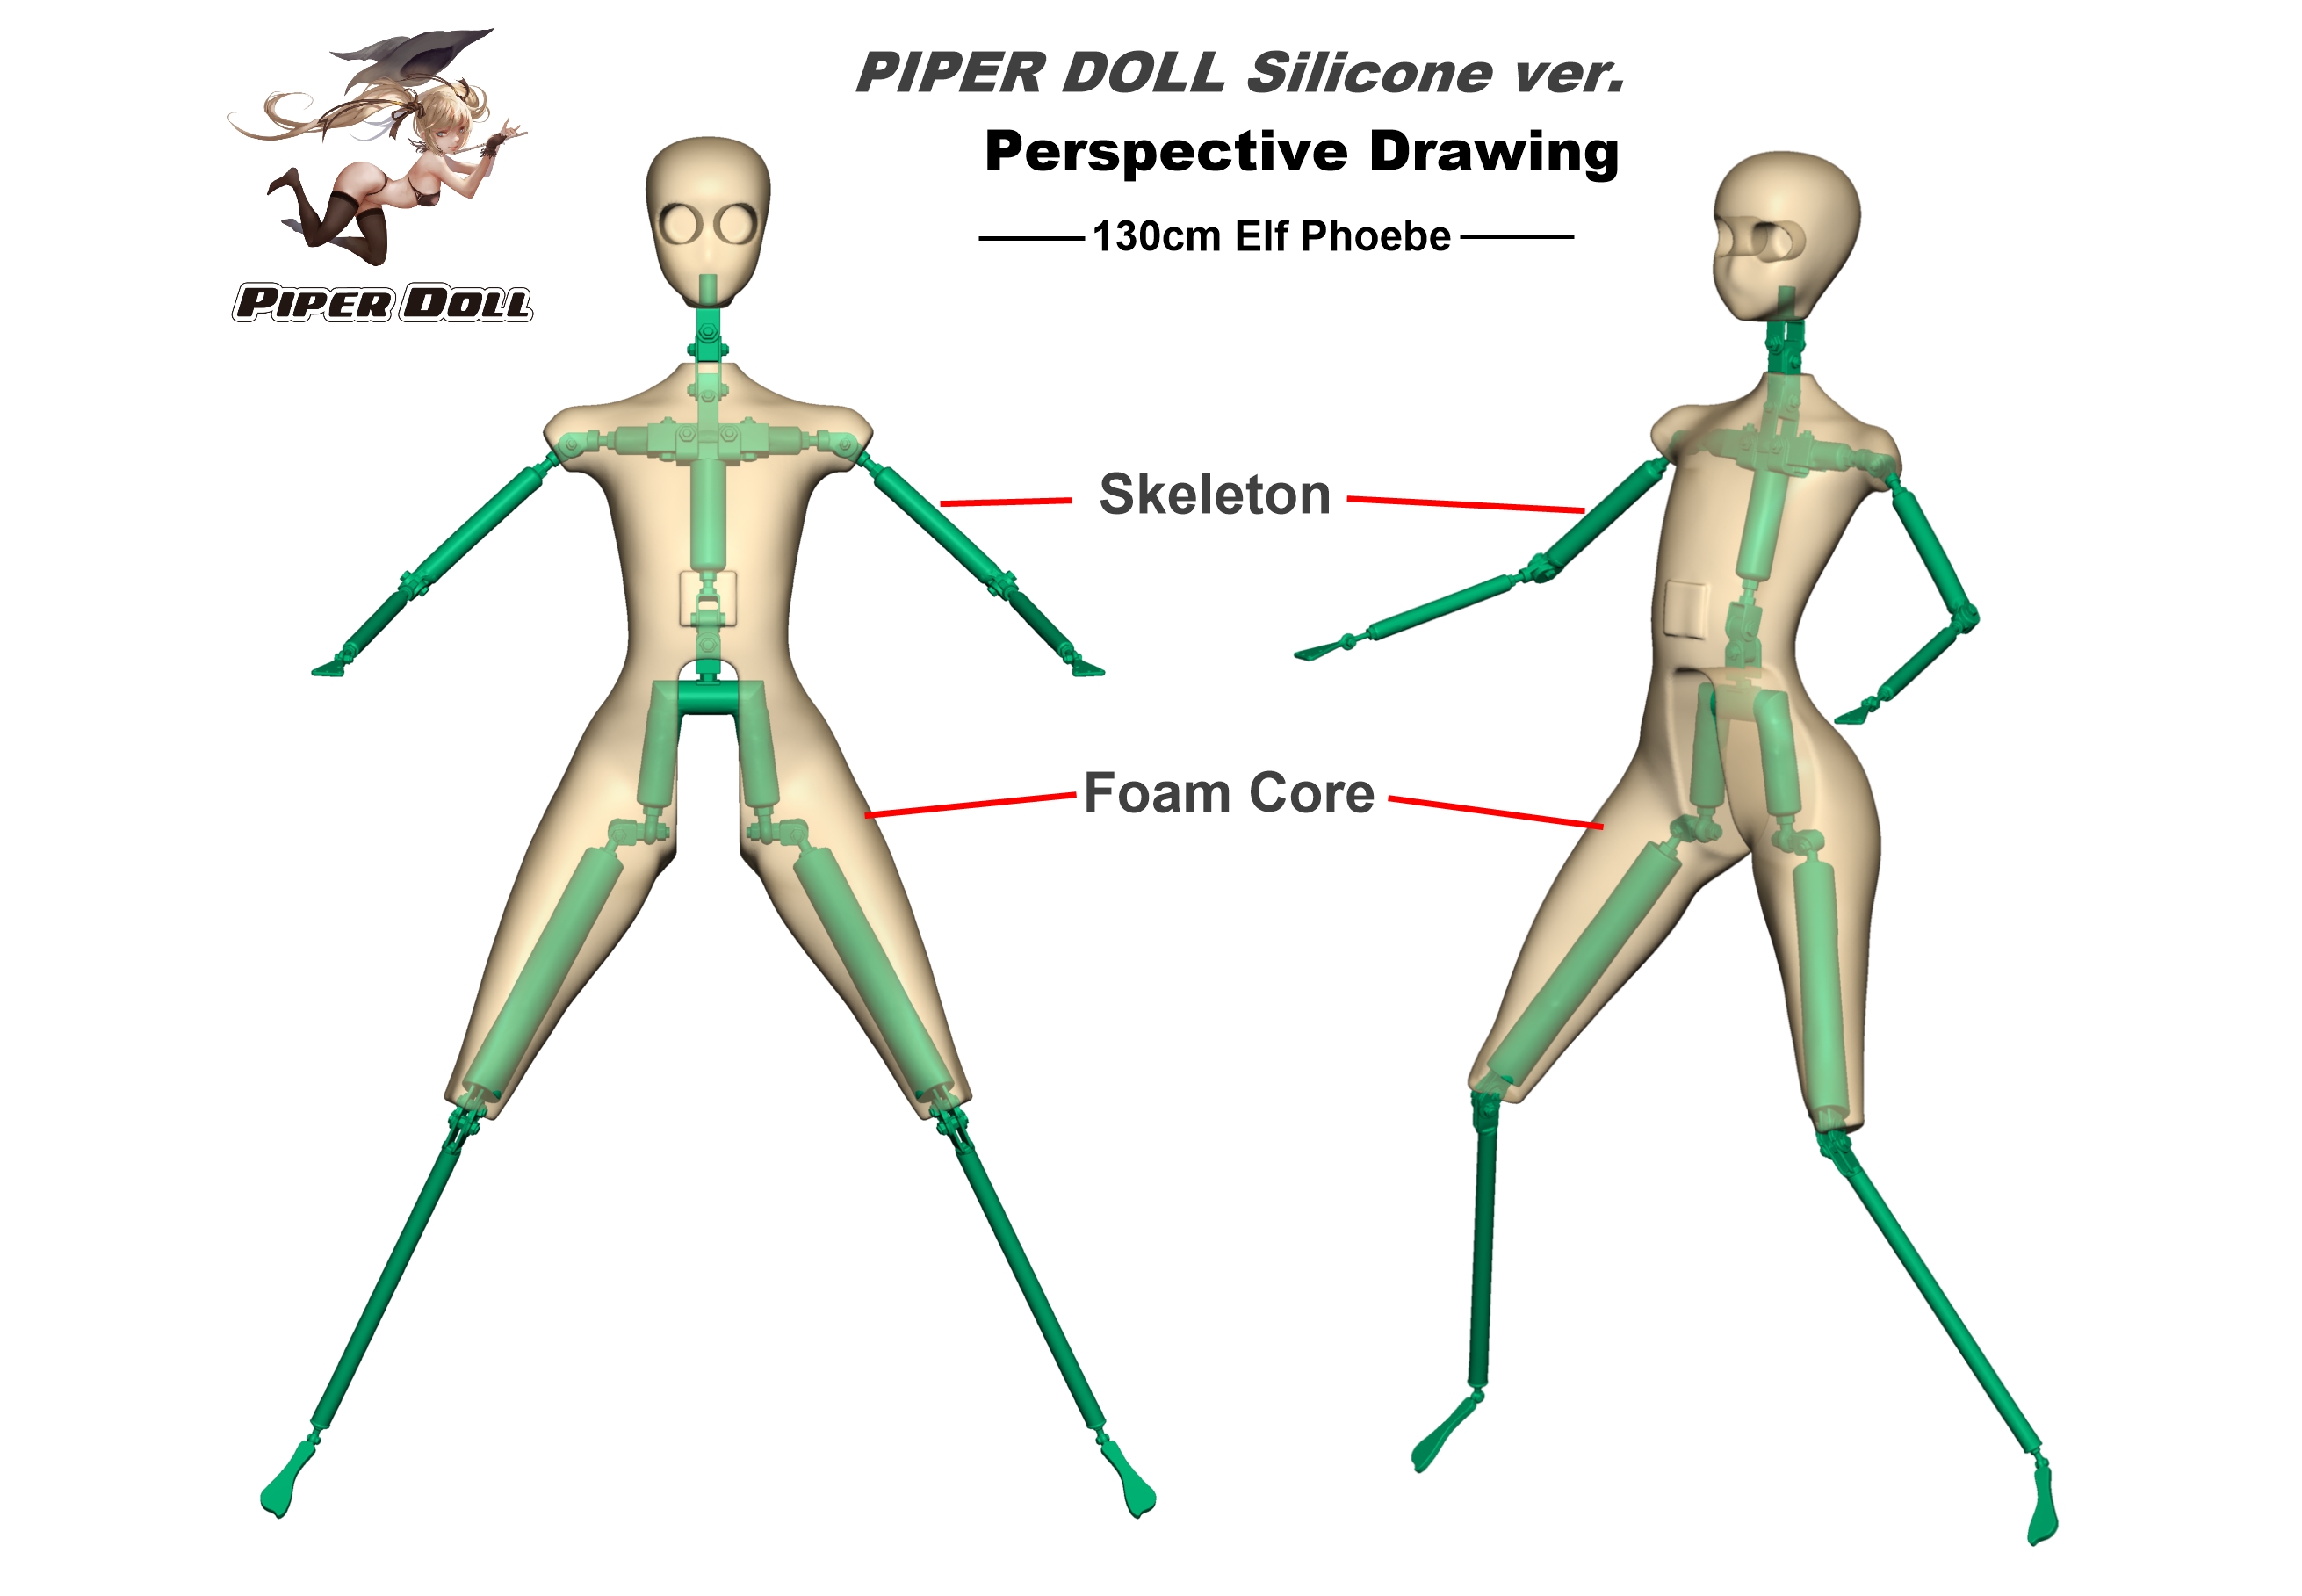 Piper Doll 130cm Silicone Phoebe Elf